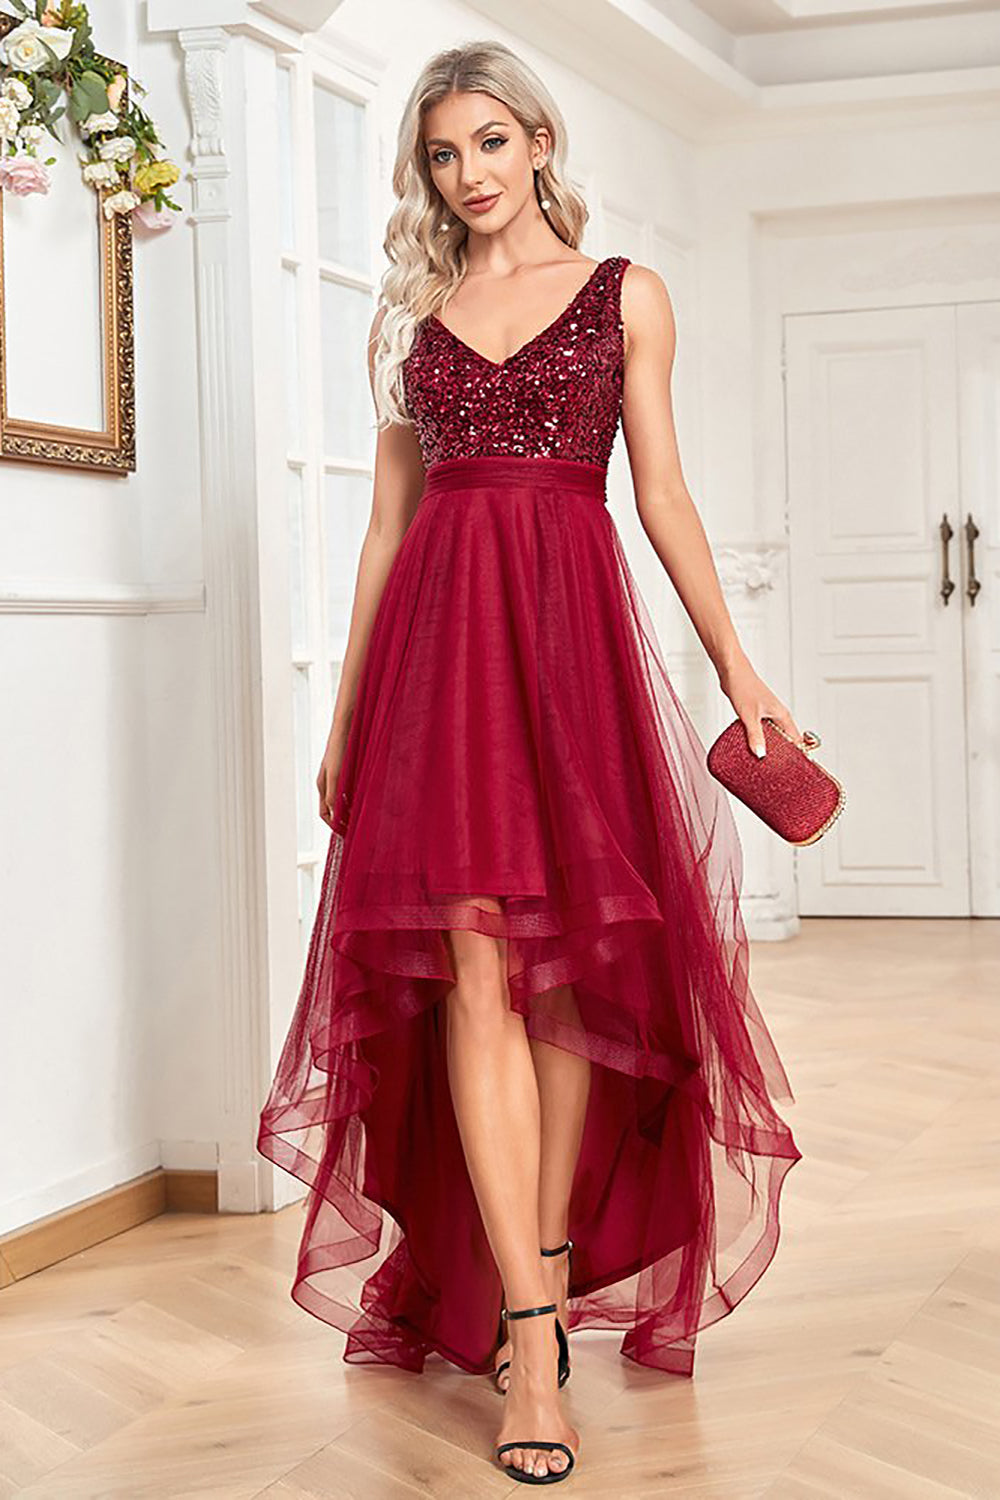 High Low Burgundy Sparkly Sequin V-Neck Prom Dress